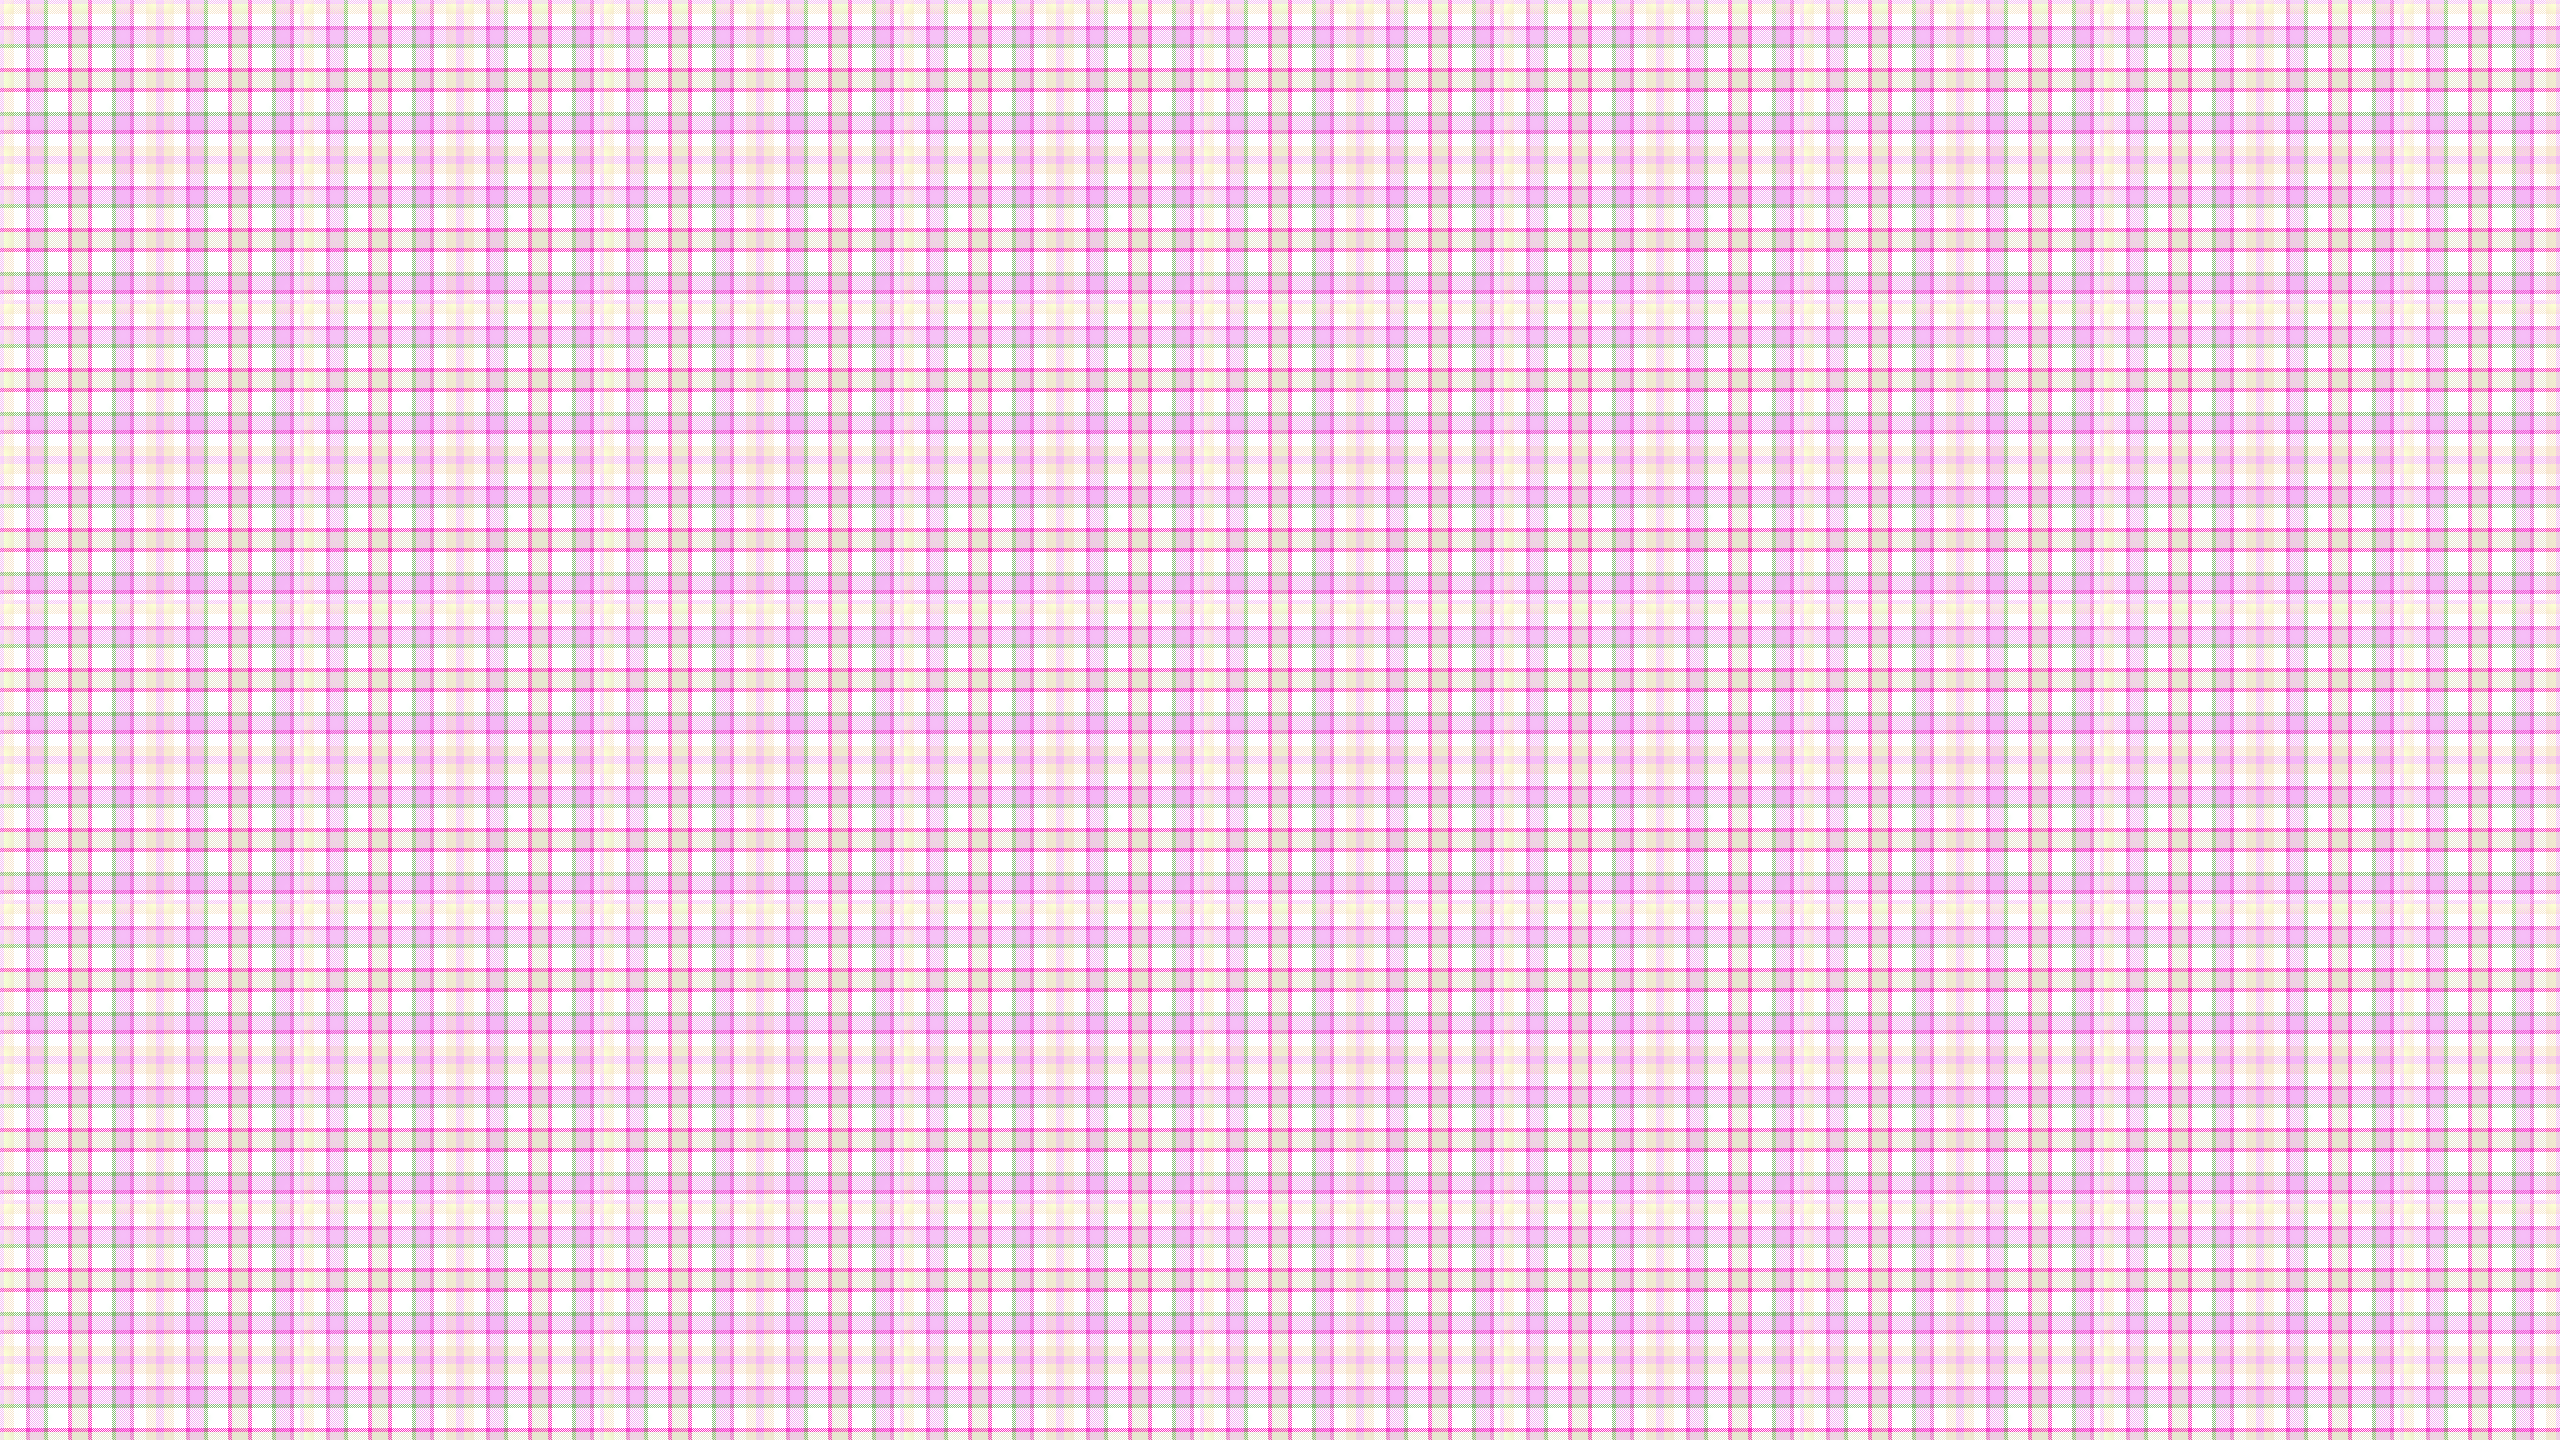 Free download PC [2560x1440] for your Desktop, Mobile & Tablet. Explore Pink Plaid Wallpaper. Plaid Wallpaper Border, Country Plaid Wallpaper, Plaid Wallpaper for Home